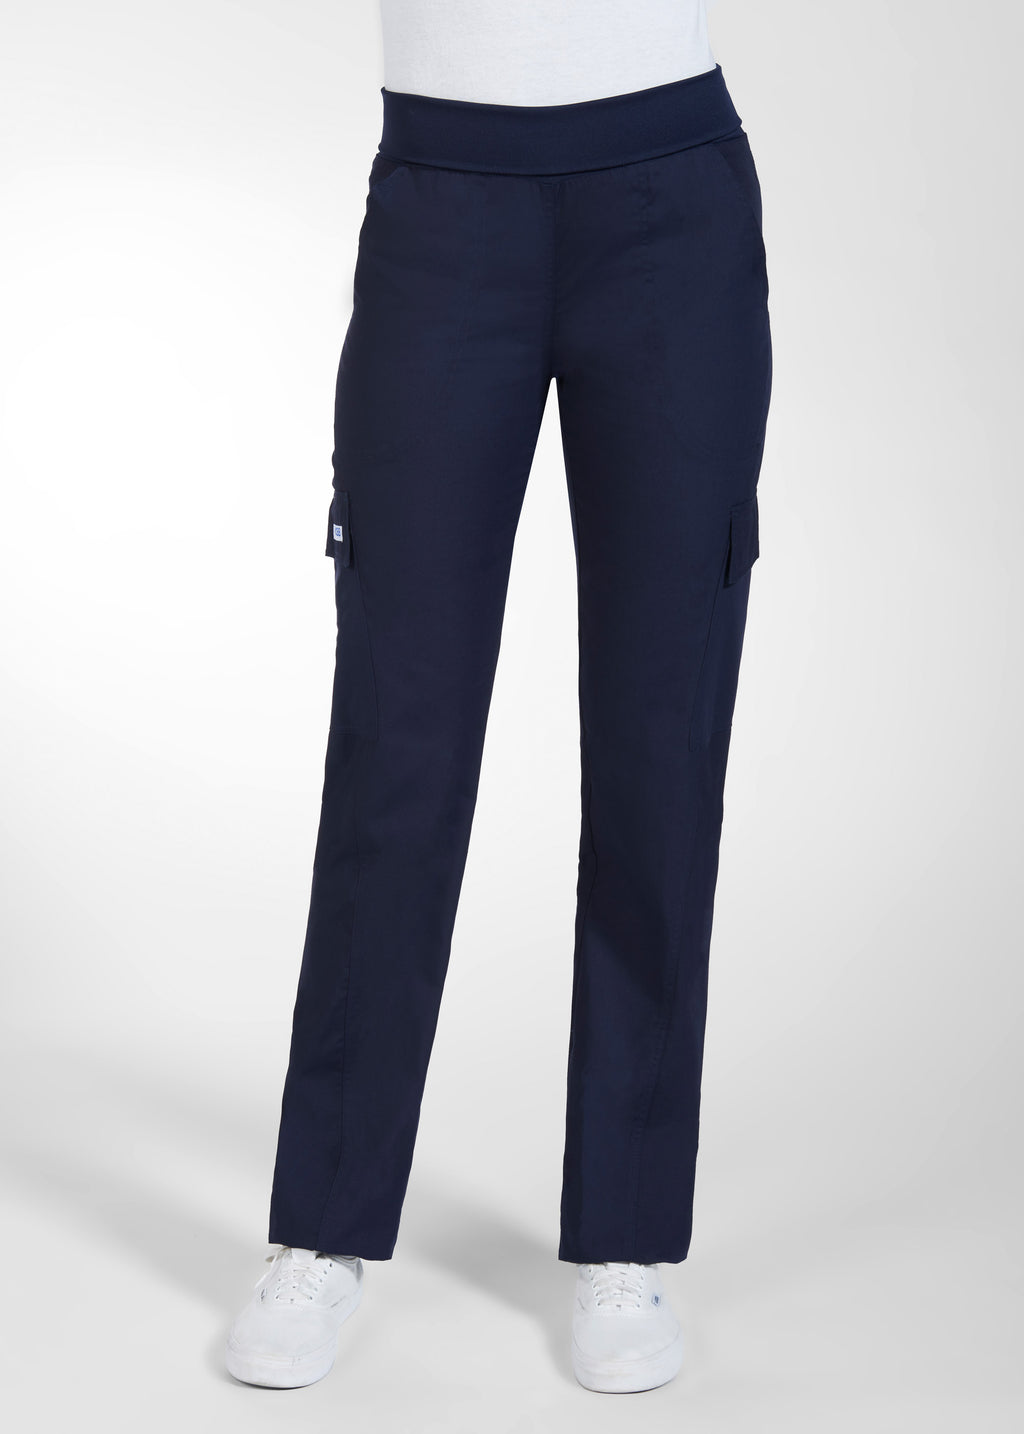 Women039s Trousers DIXIE Pciqugba Multicolour E2023  eBay